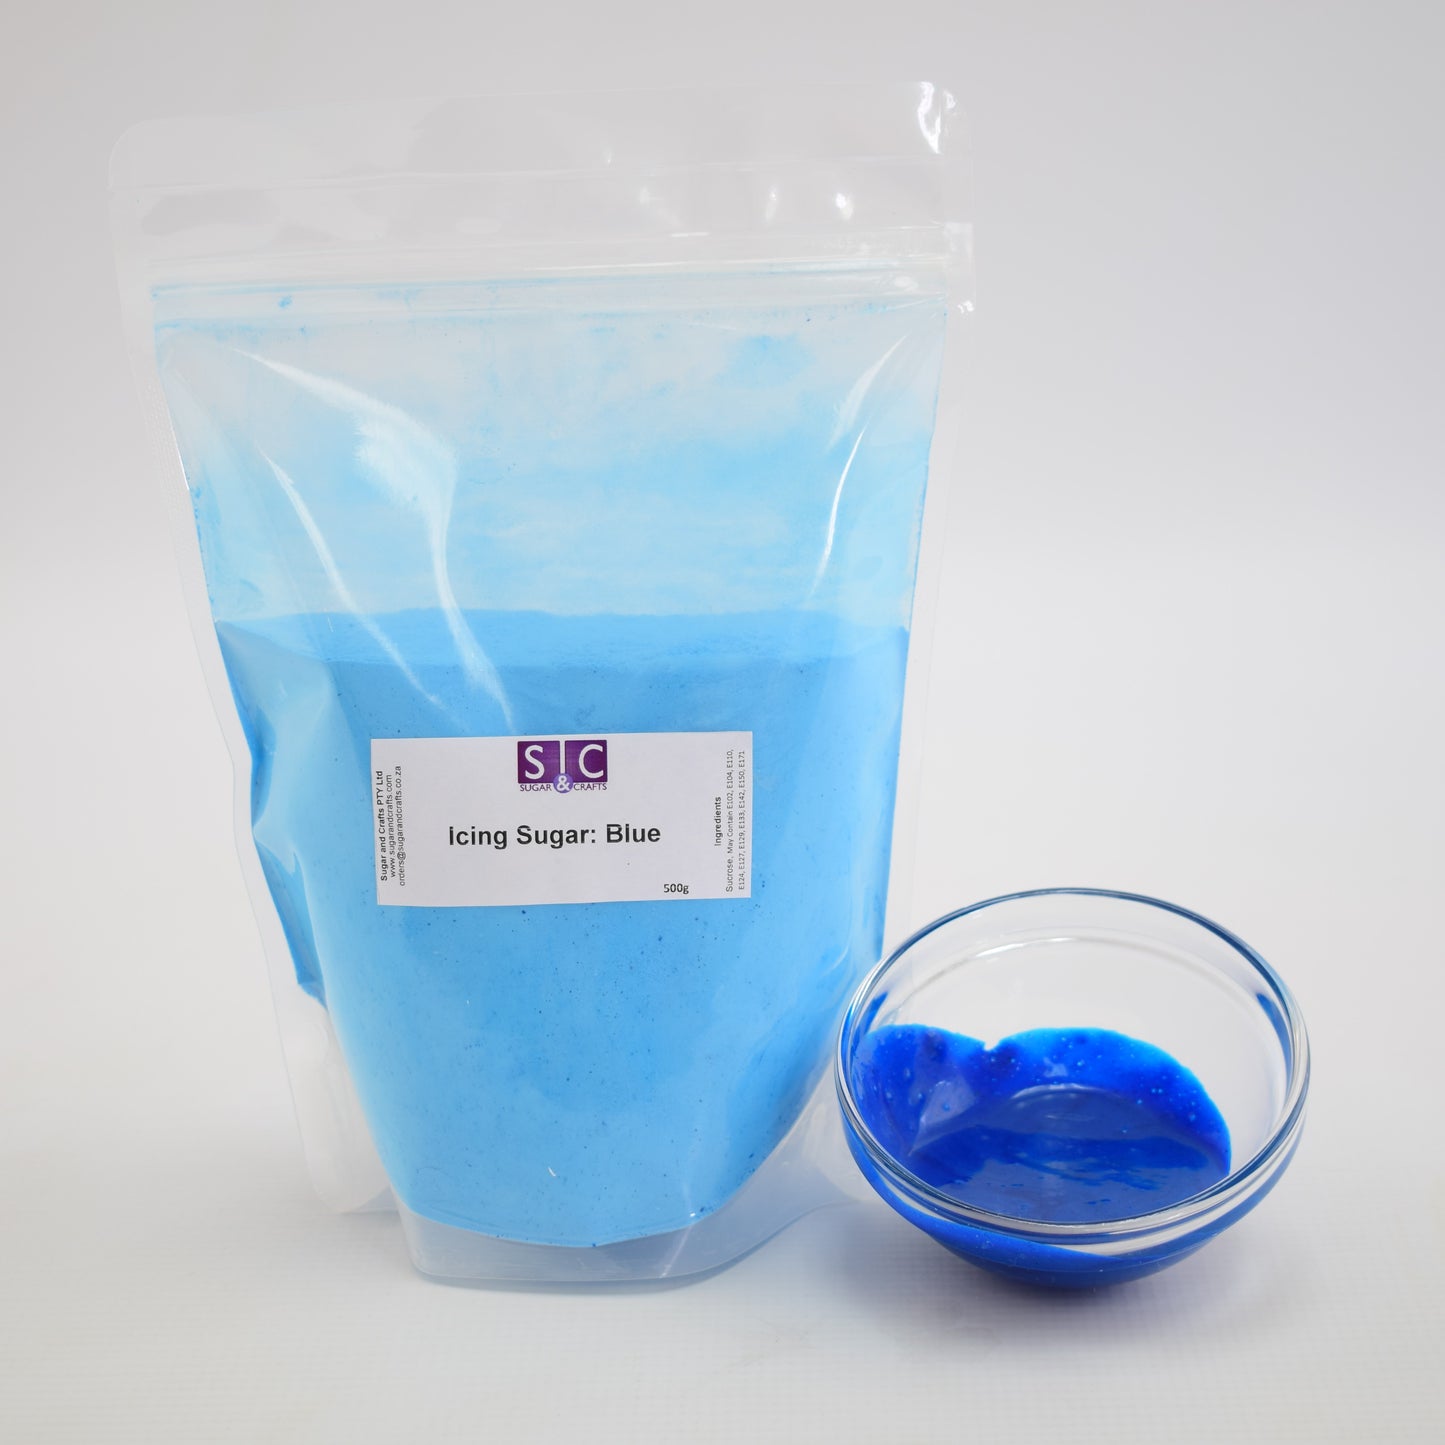 Coloured Icing Sugar: Blue